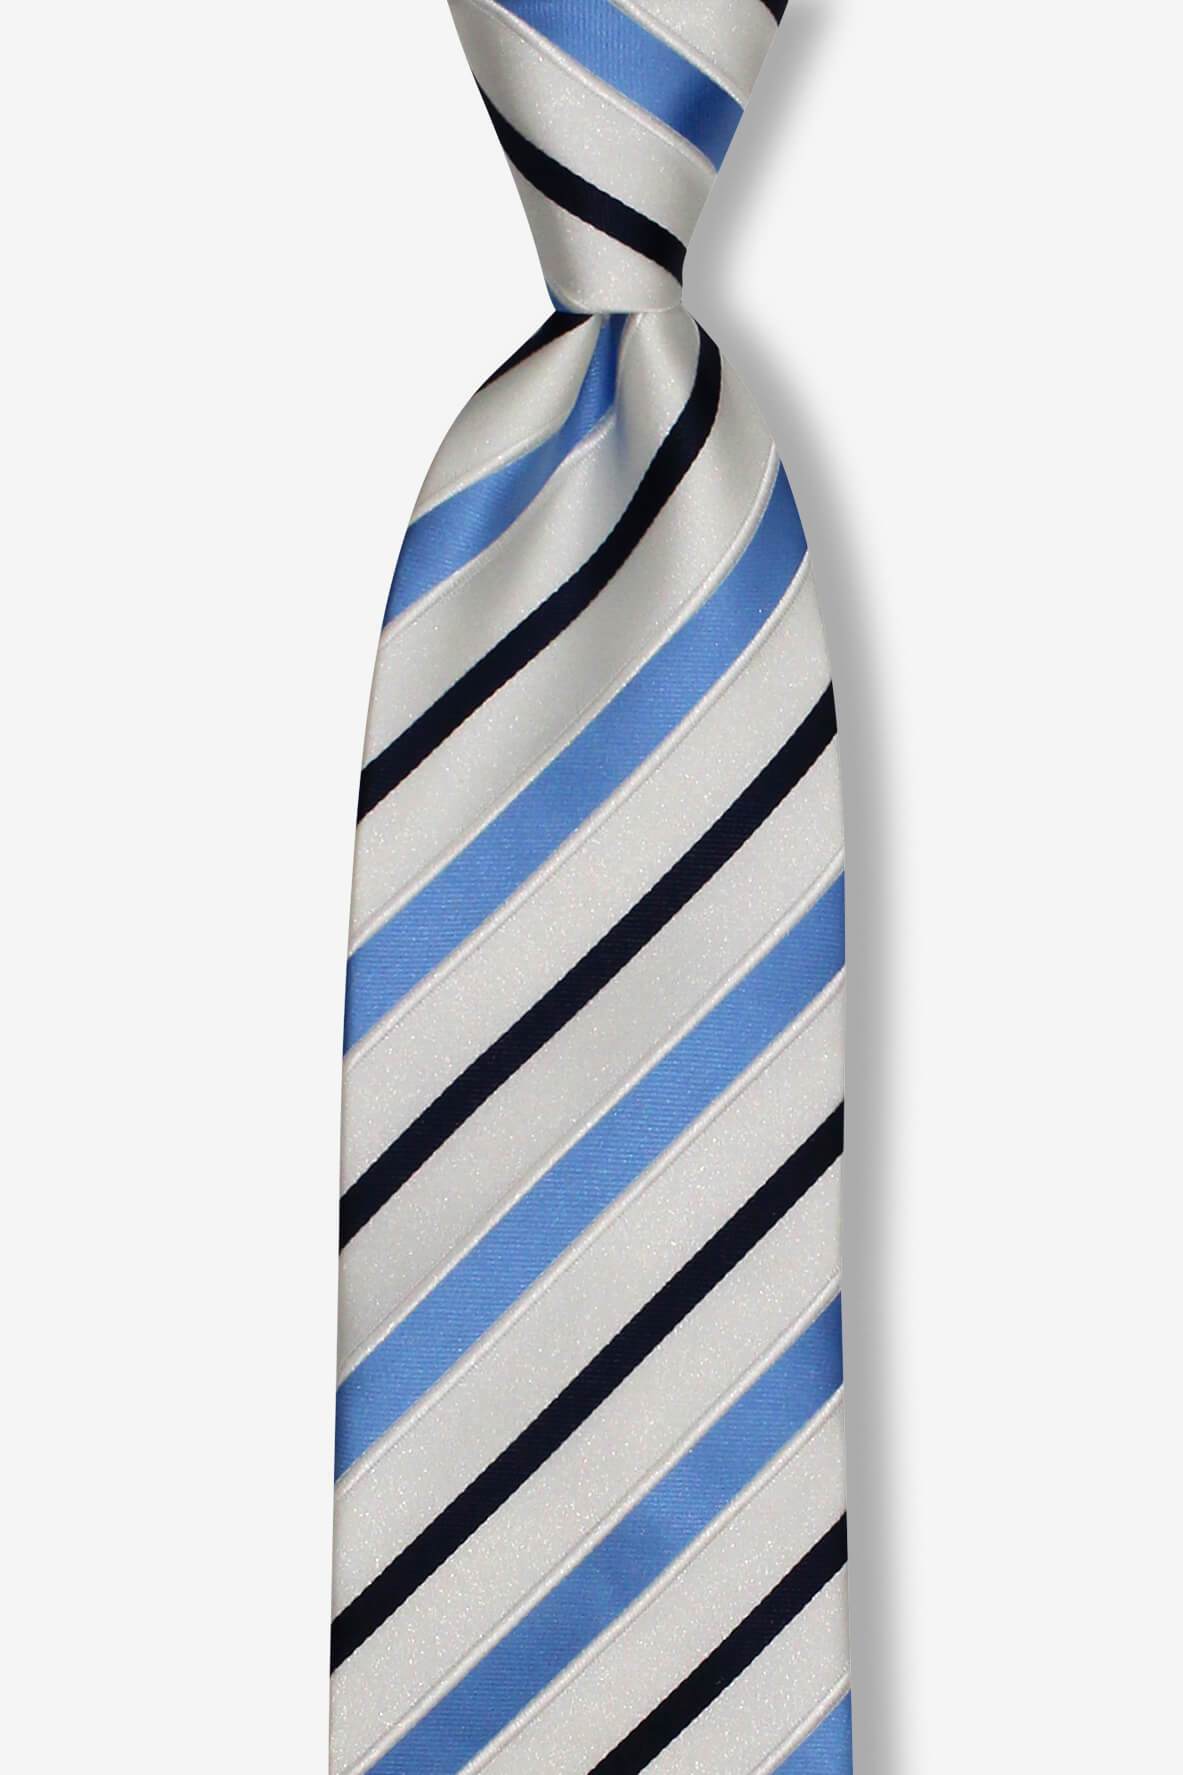 Classic Blue Striped Tie only $35.00 - GoTie